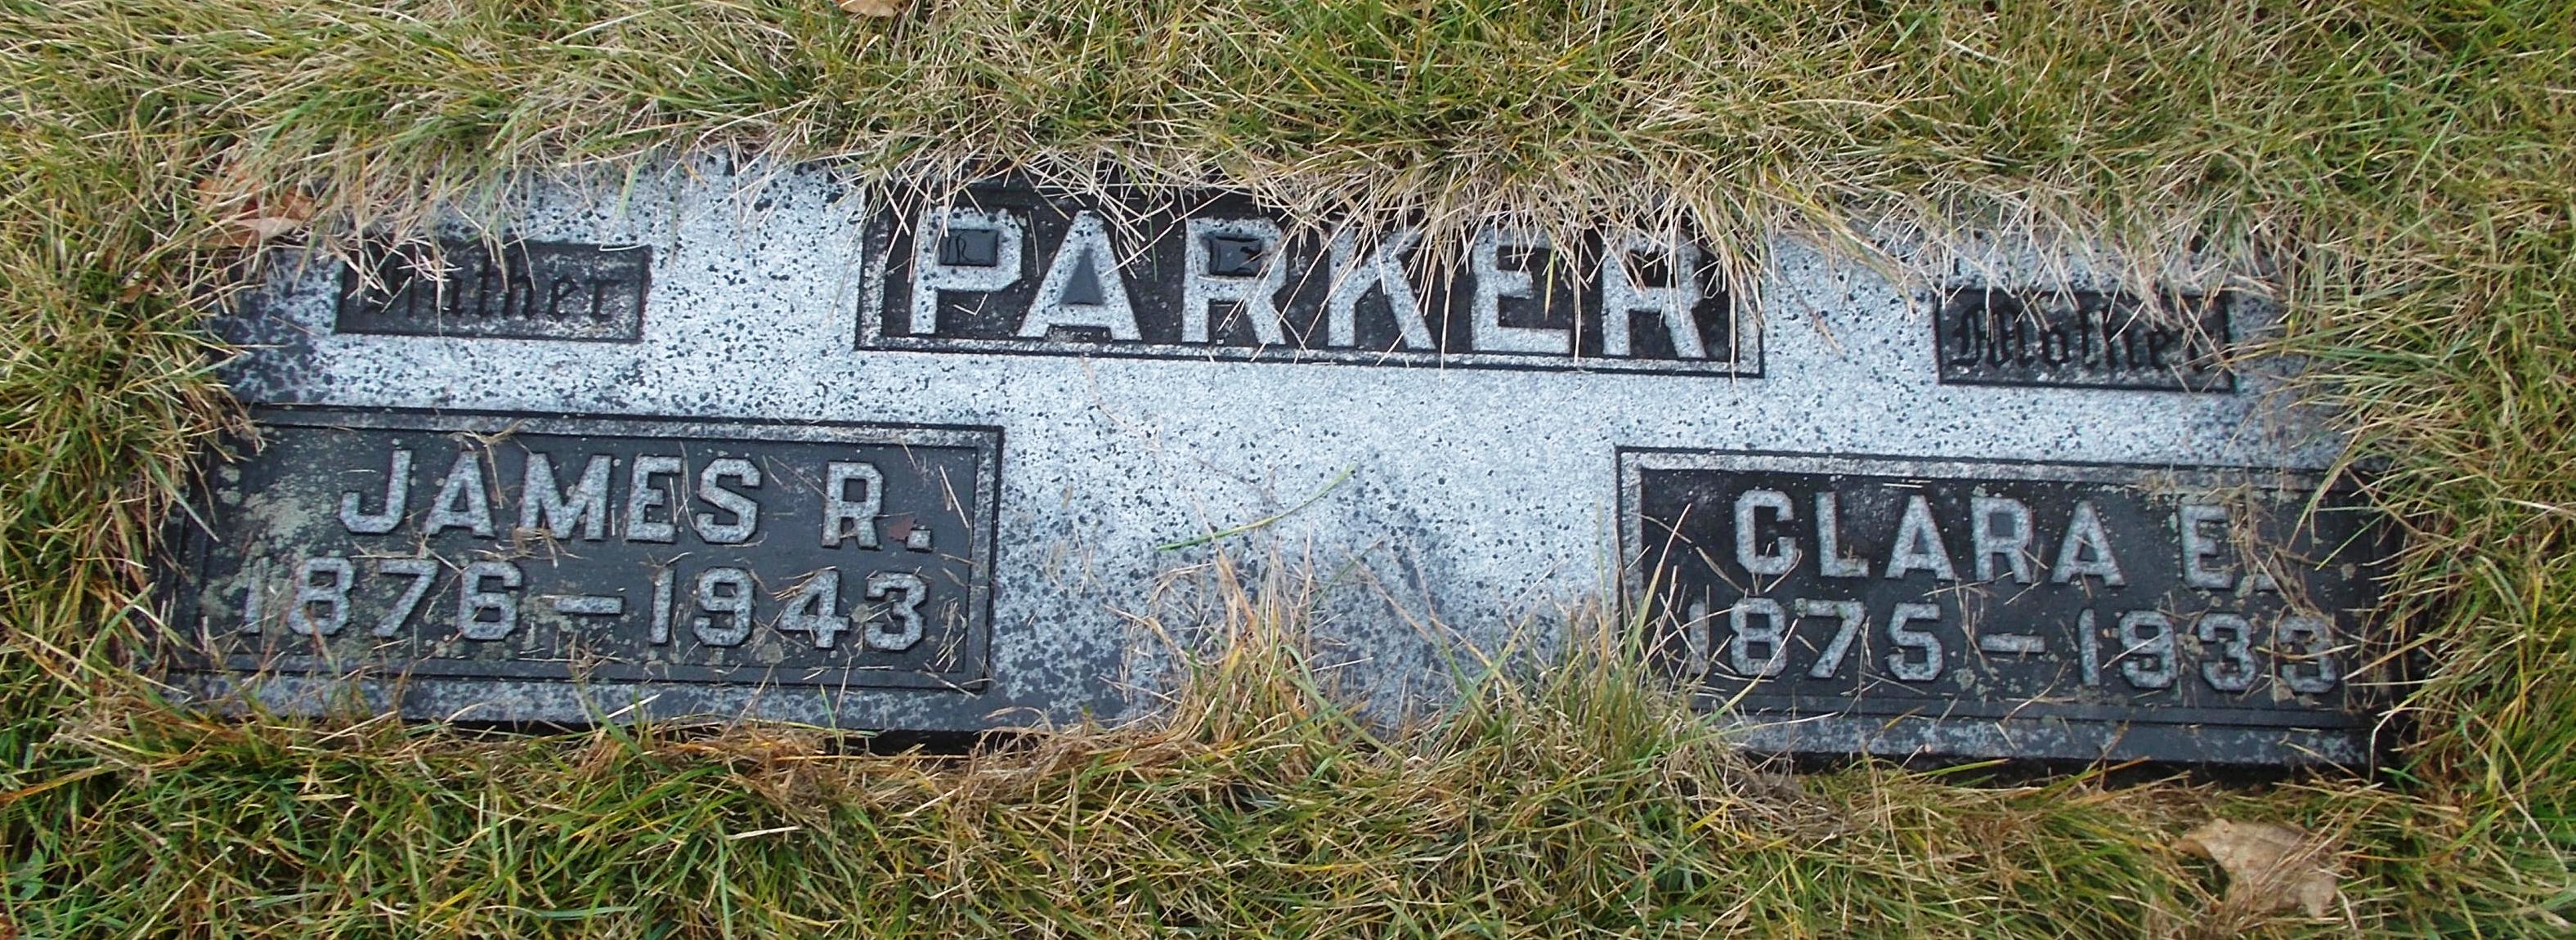 James R Parker